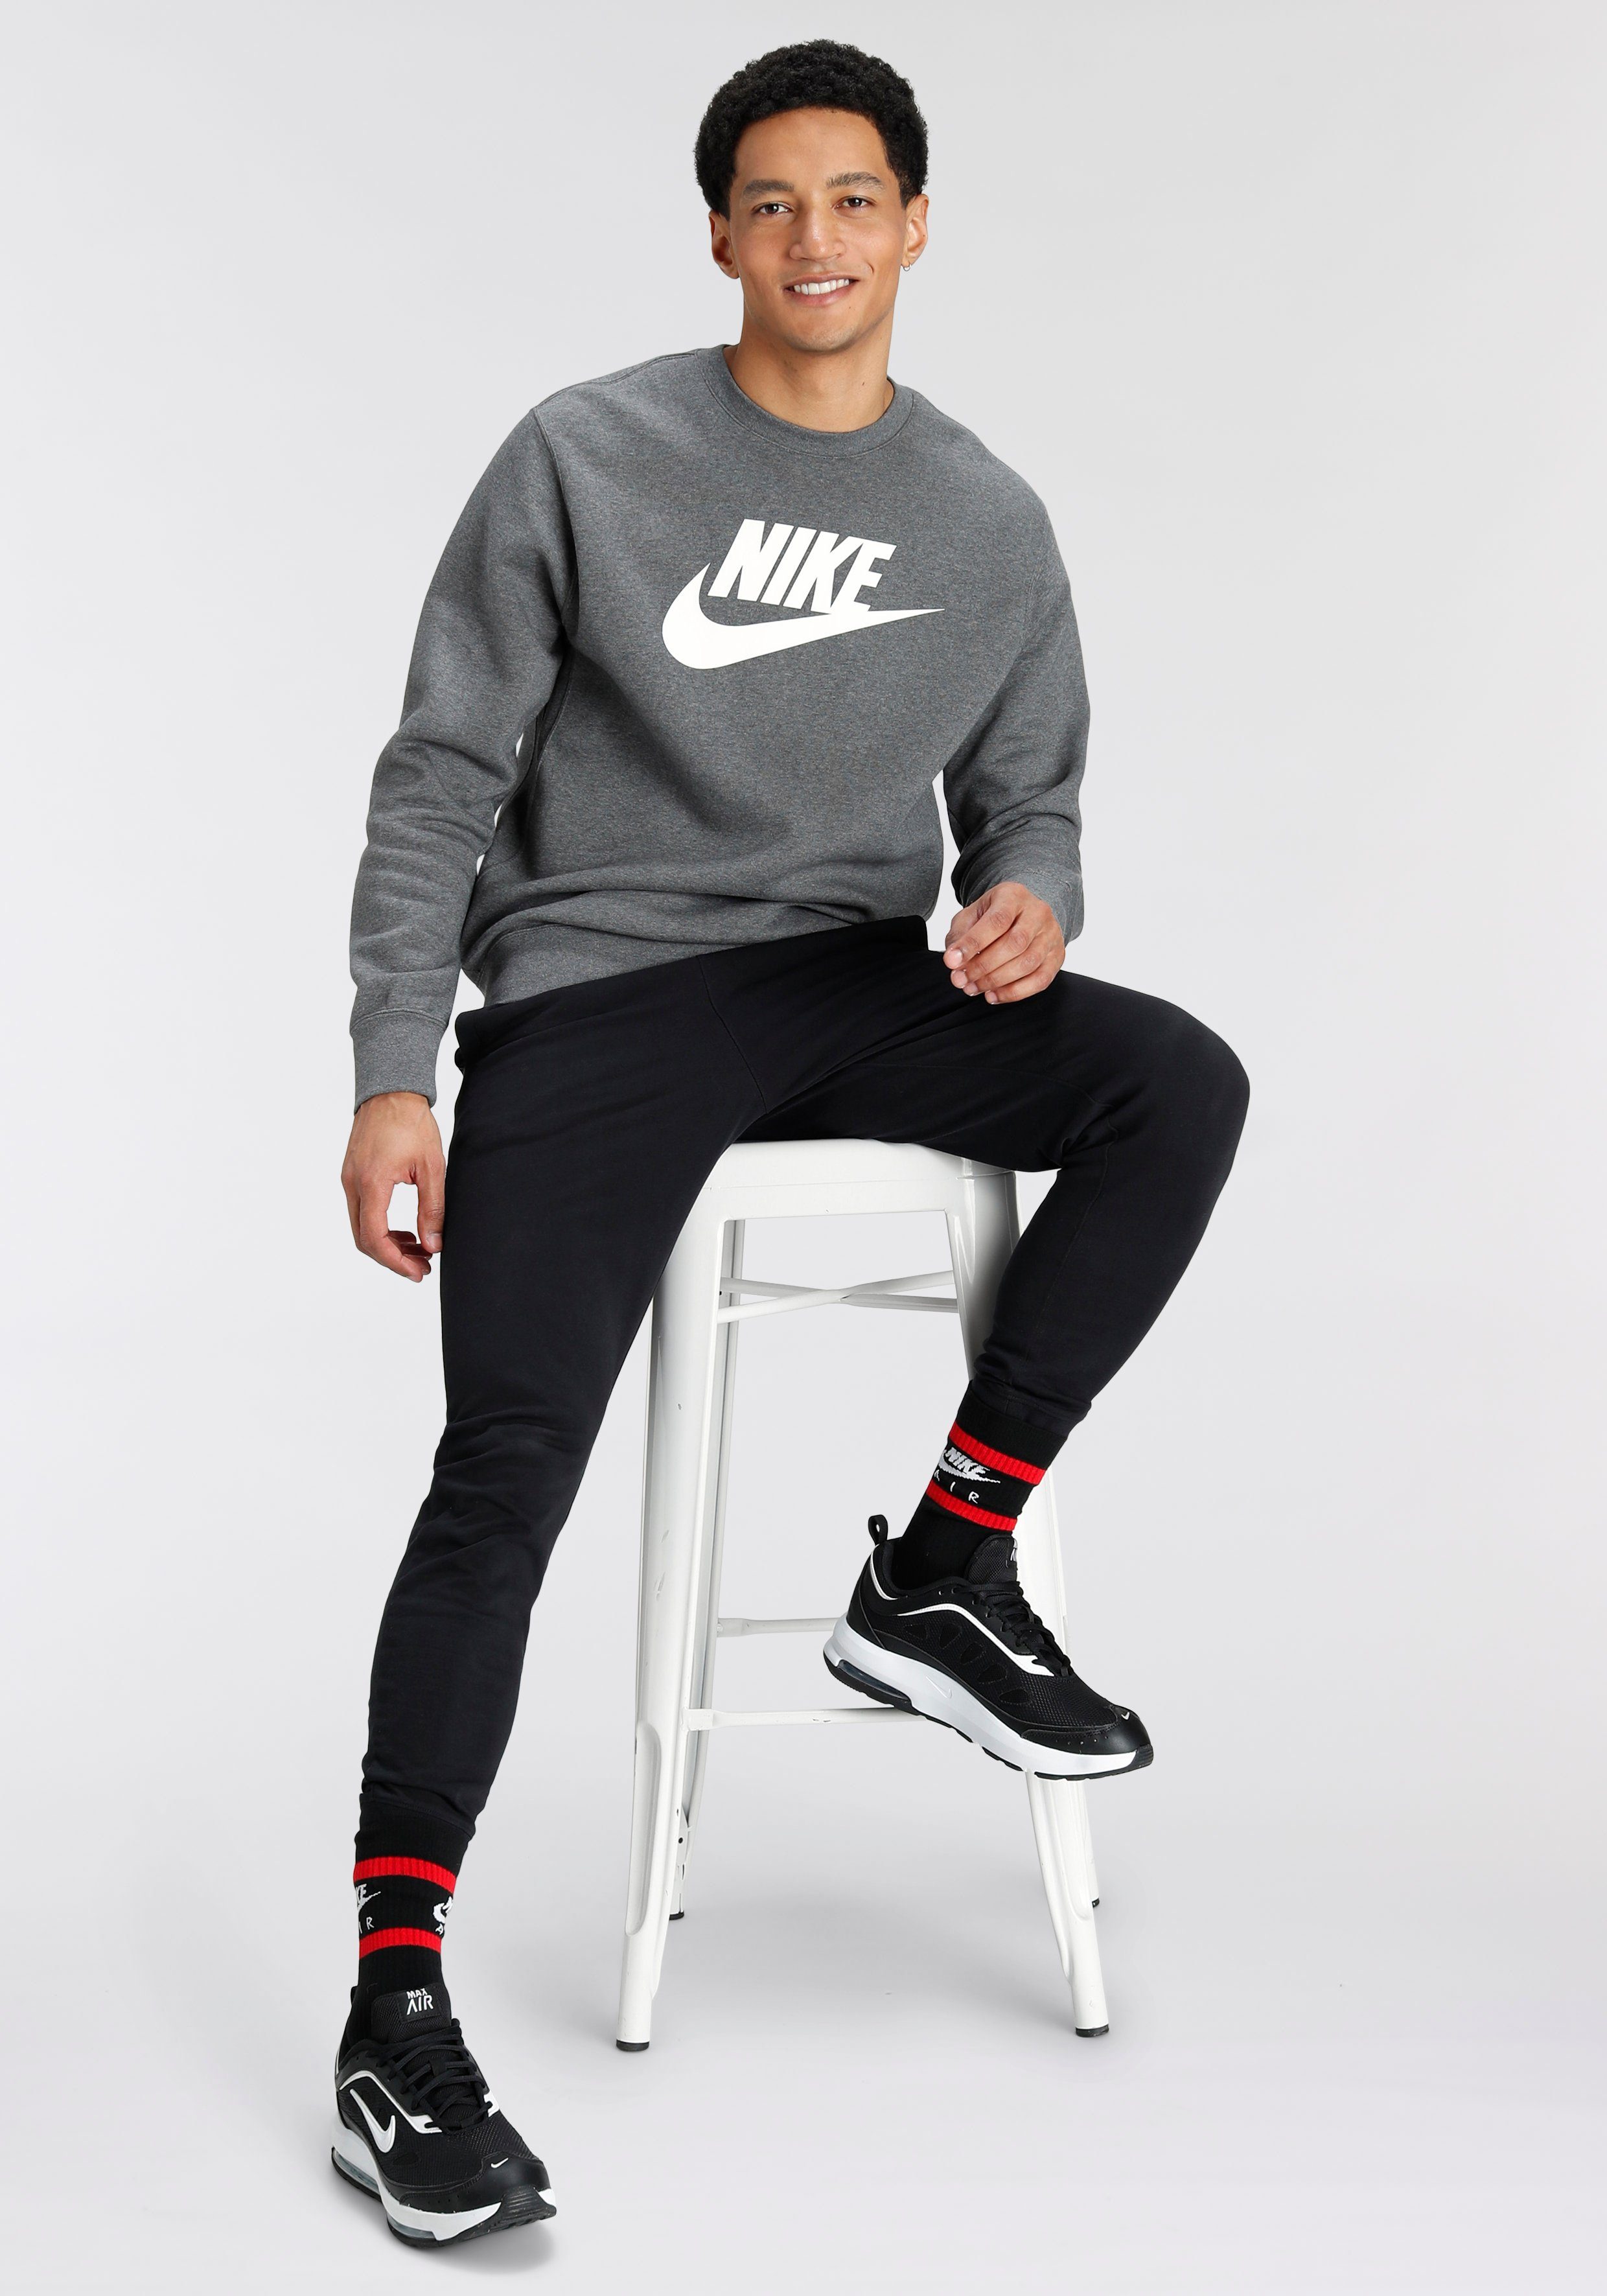 Nike Sportswear Sweatshirt Club Fleece Graphic Men's CHARCOAL Crew HEATHR